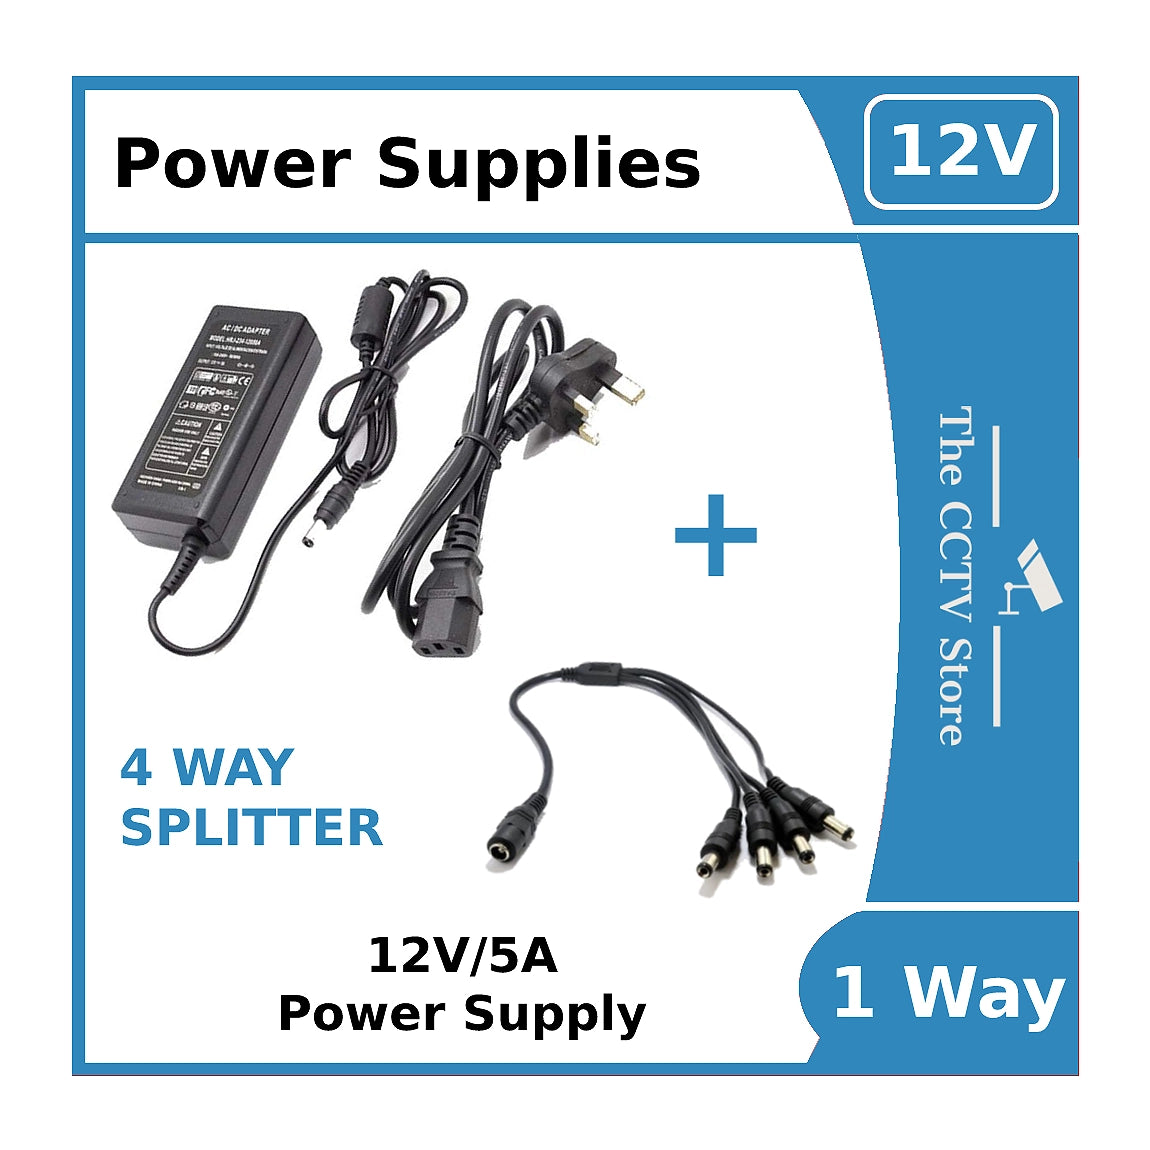 Power Supply 12V/5A for CCTV Cameras -12vDC Power Supply 5amp